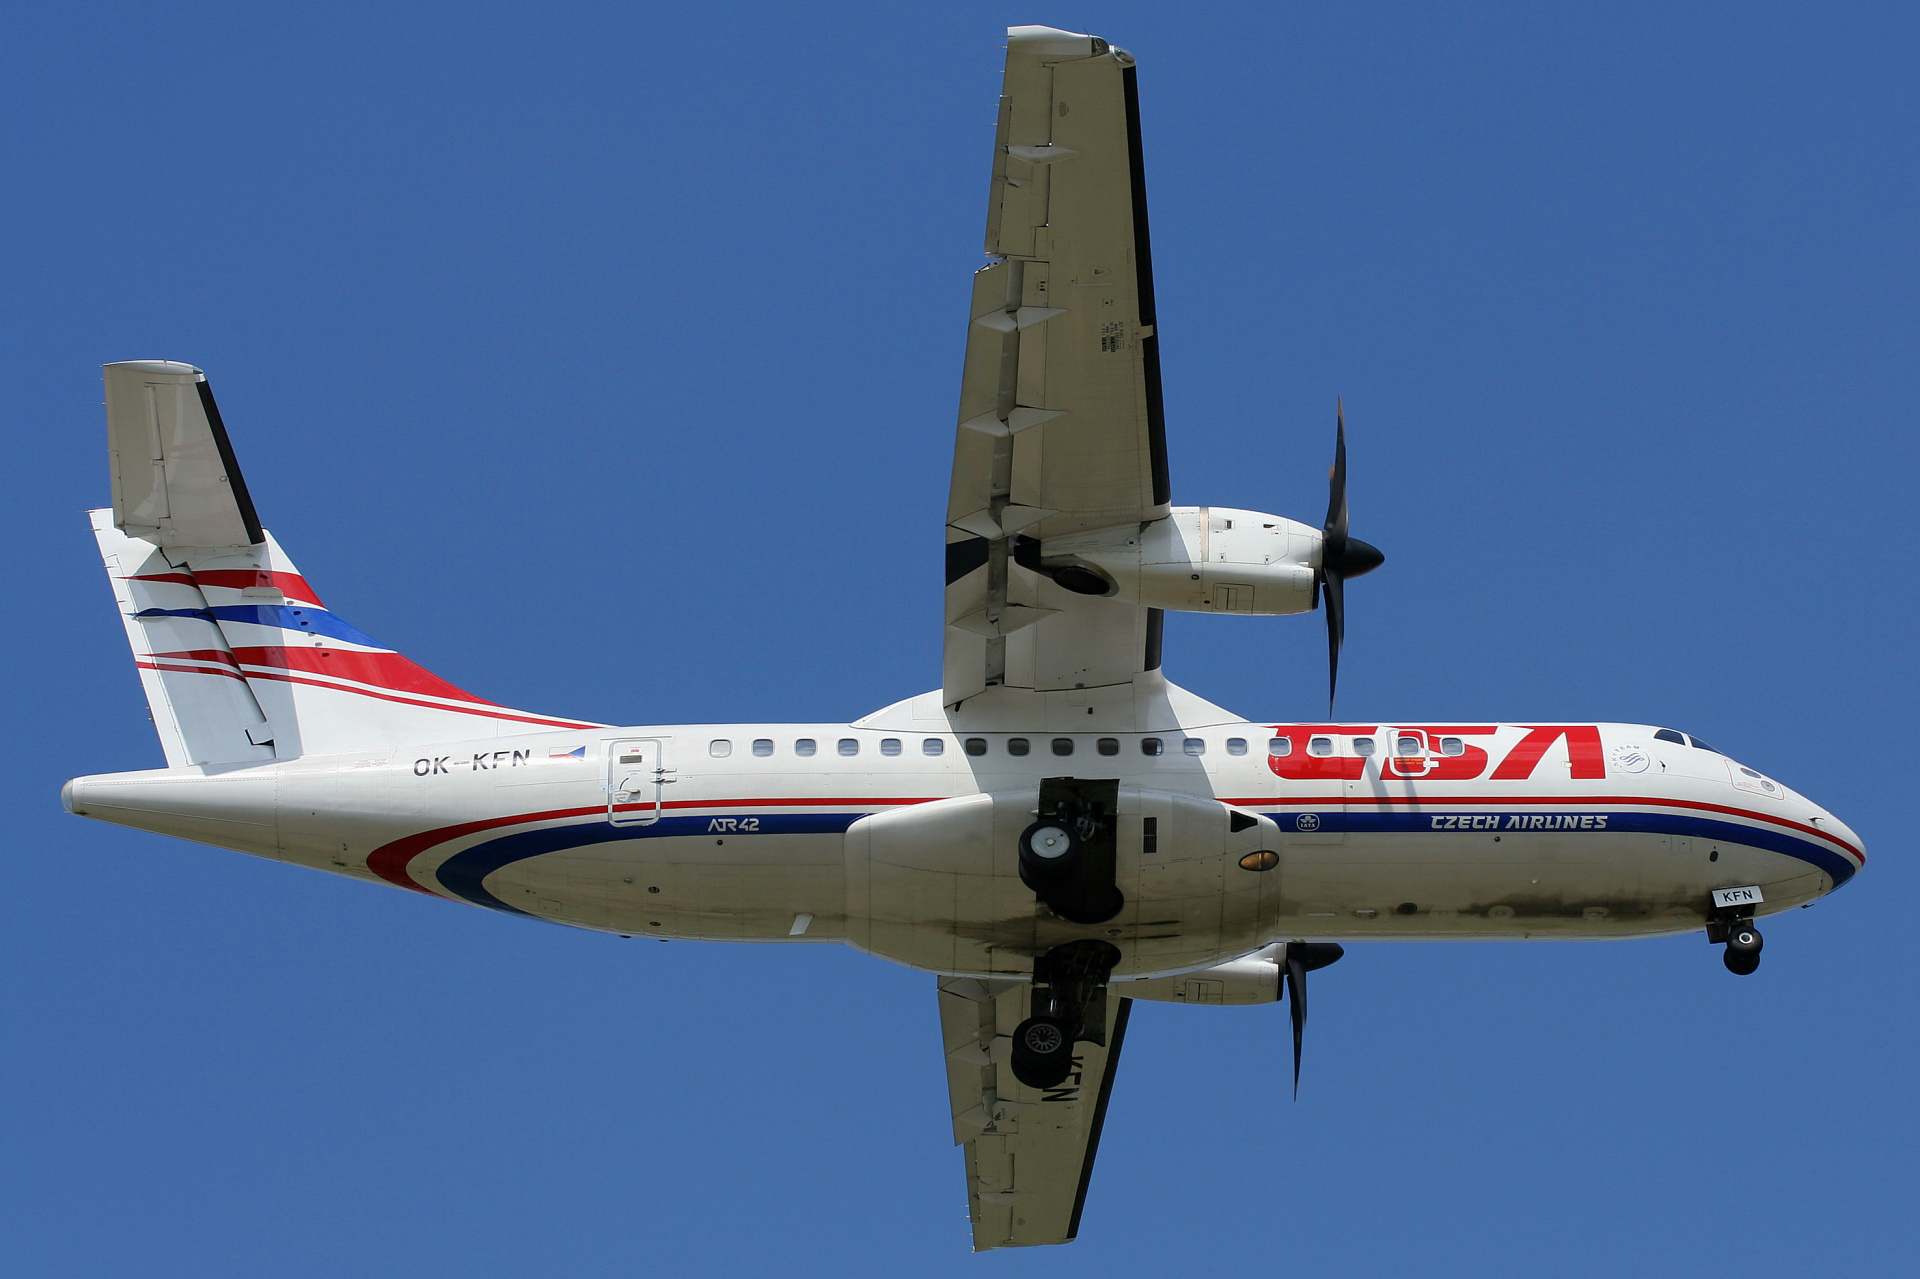 OK-KFN (Samoloty » Spotting na EPWA » ATR 42 » CSA Czech Airlines)